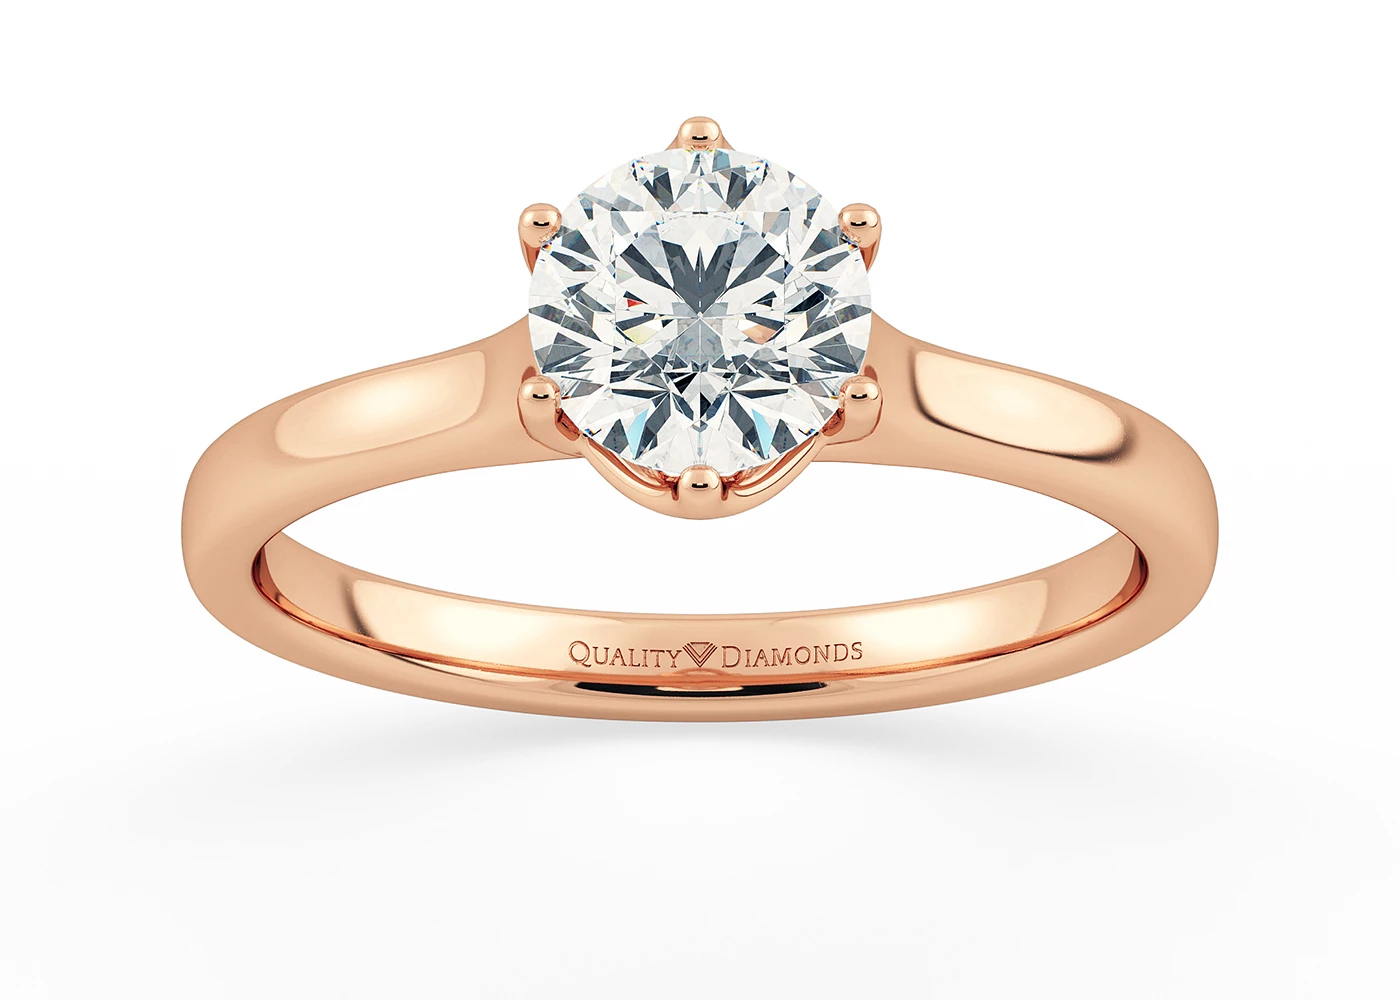 Six Claw Round Brilliant Promessa Diamond Ring in 18K Rose Gold